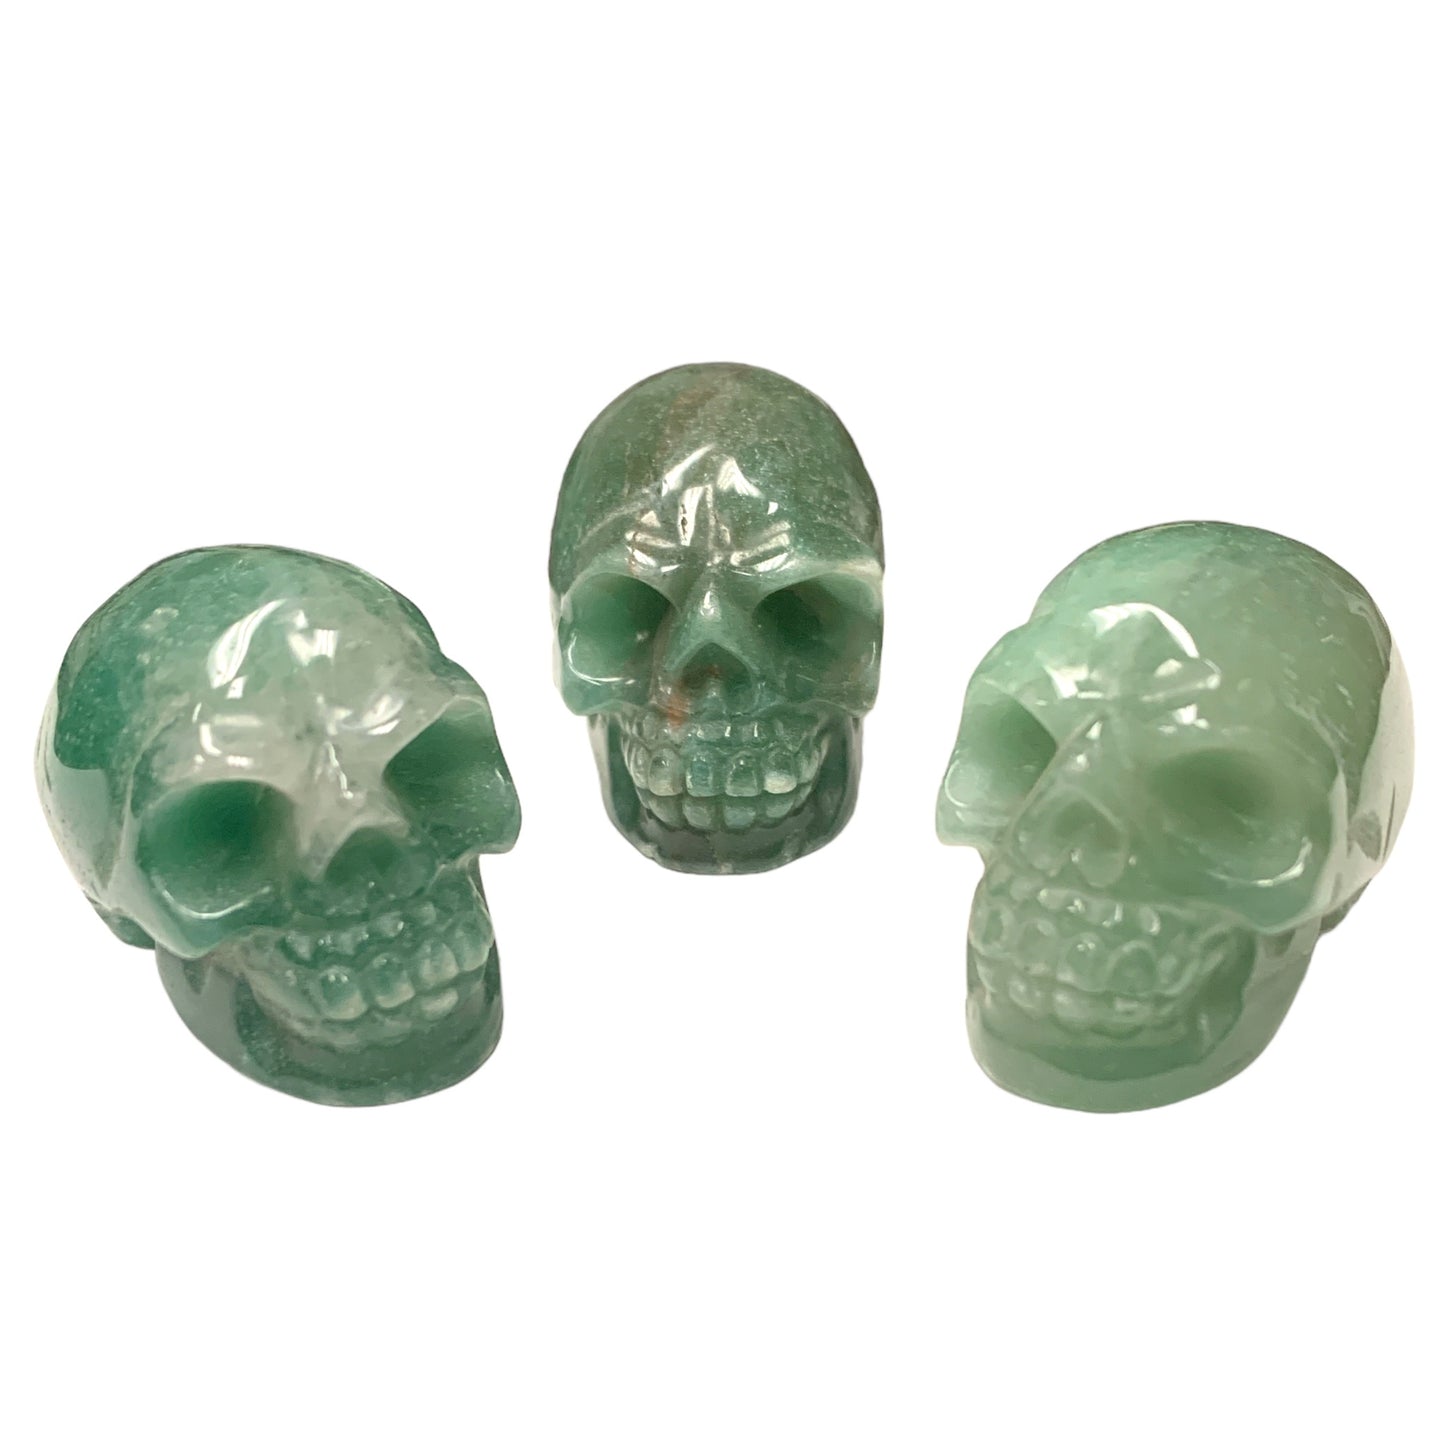 Skull - Green Aventurine - Extra Small 30Hx40Lx28mm wide - China - NEW722